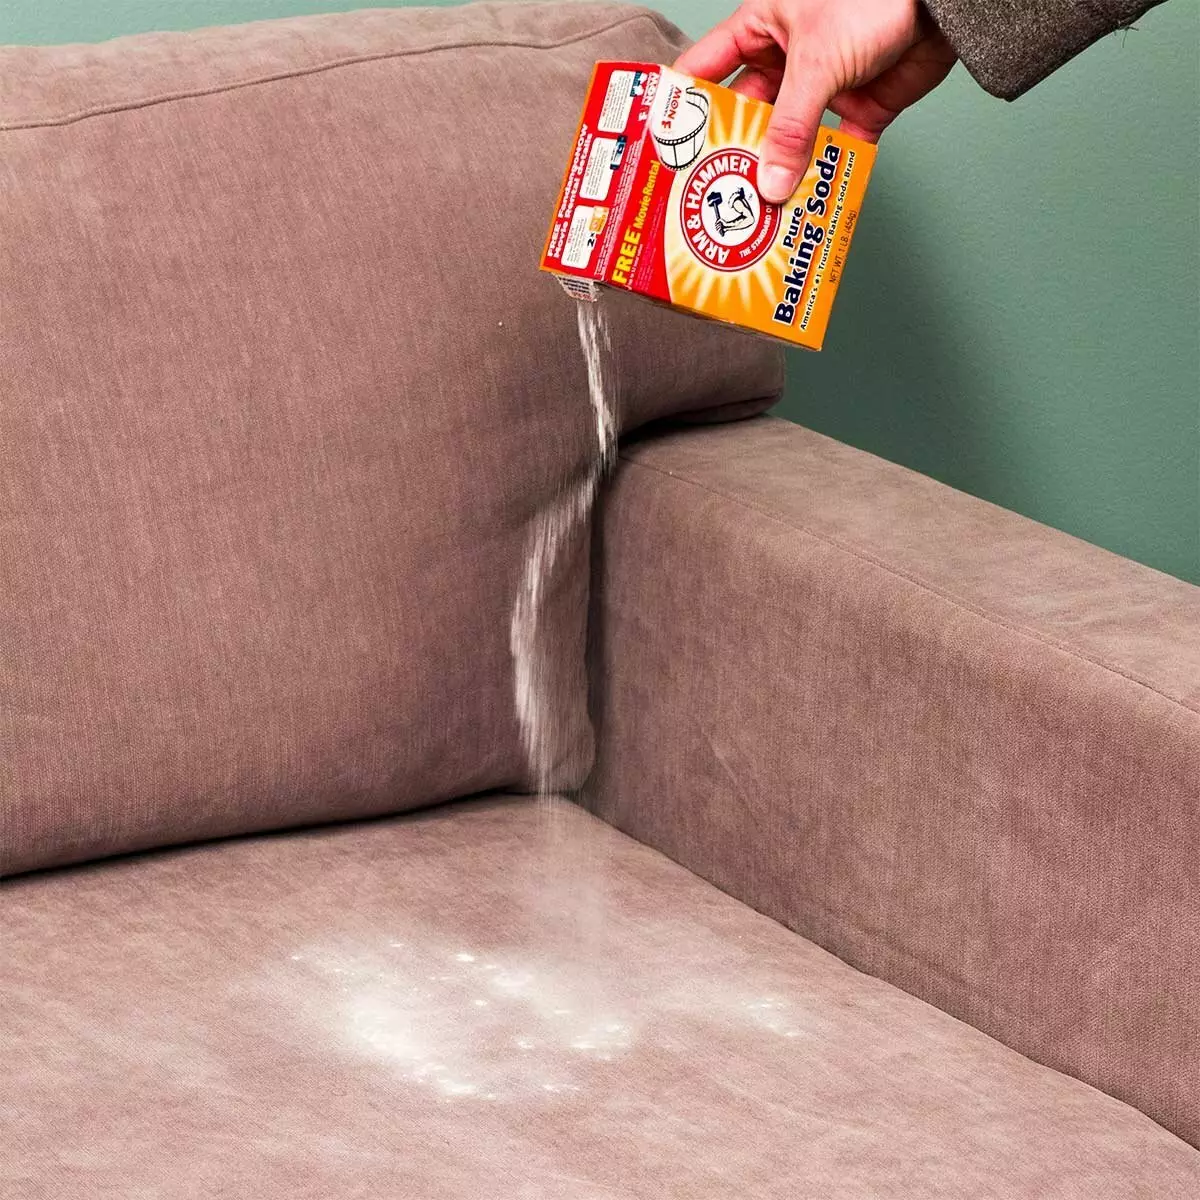 чистка диванов в домашних условиях от грязи